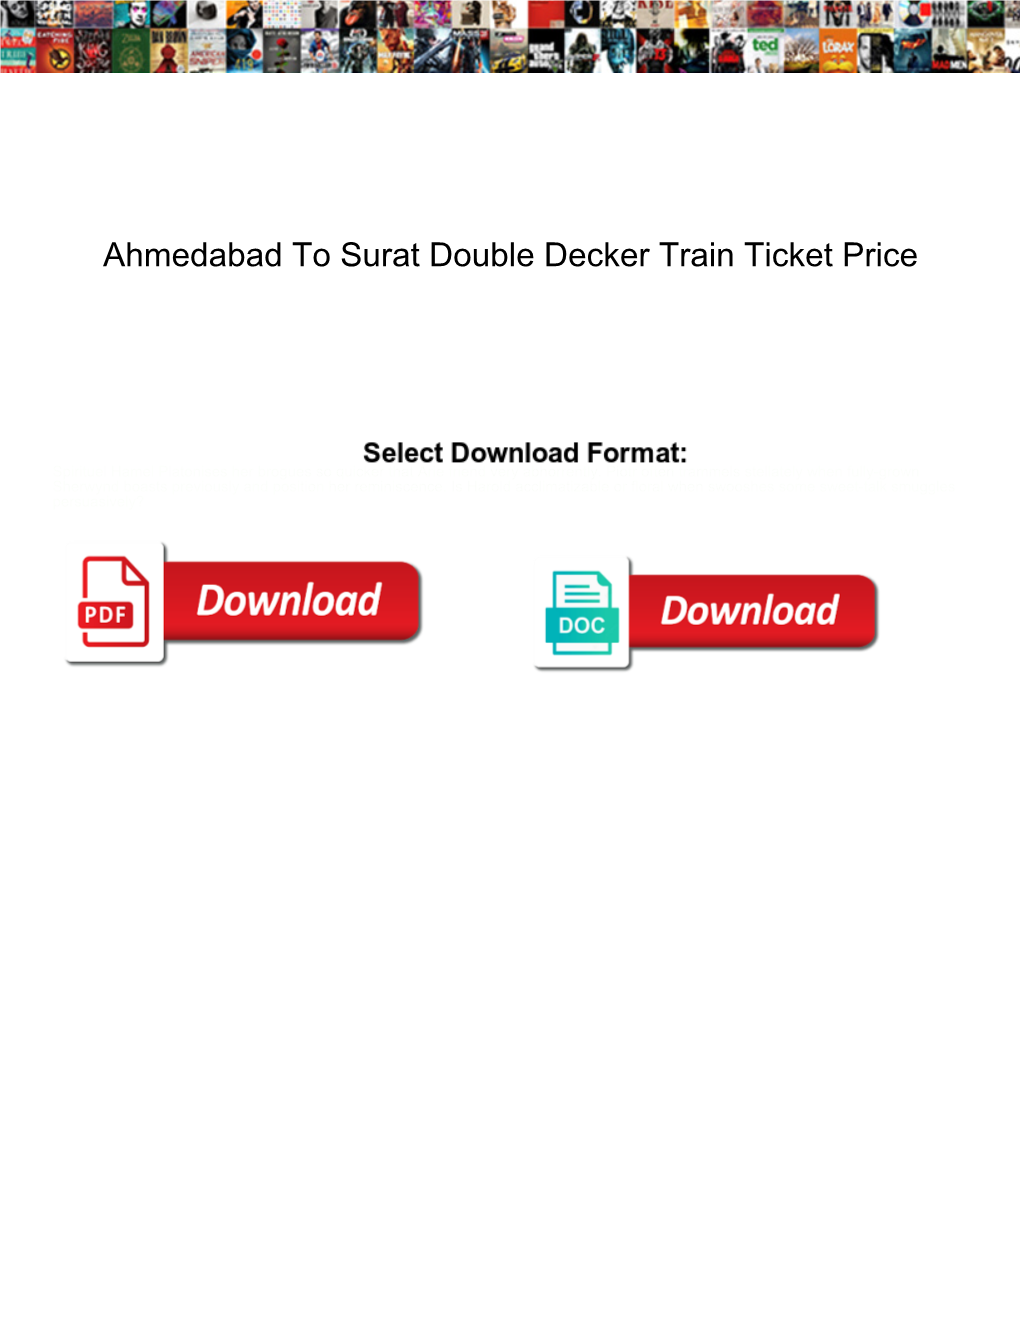 Ahmedabad to Surat Double Decker Train Ticket Price